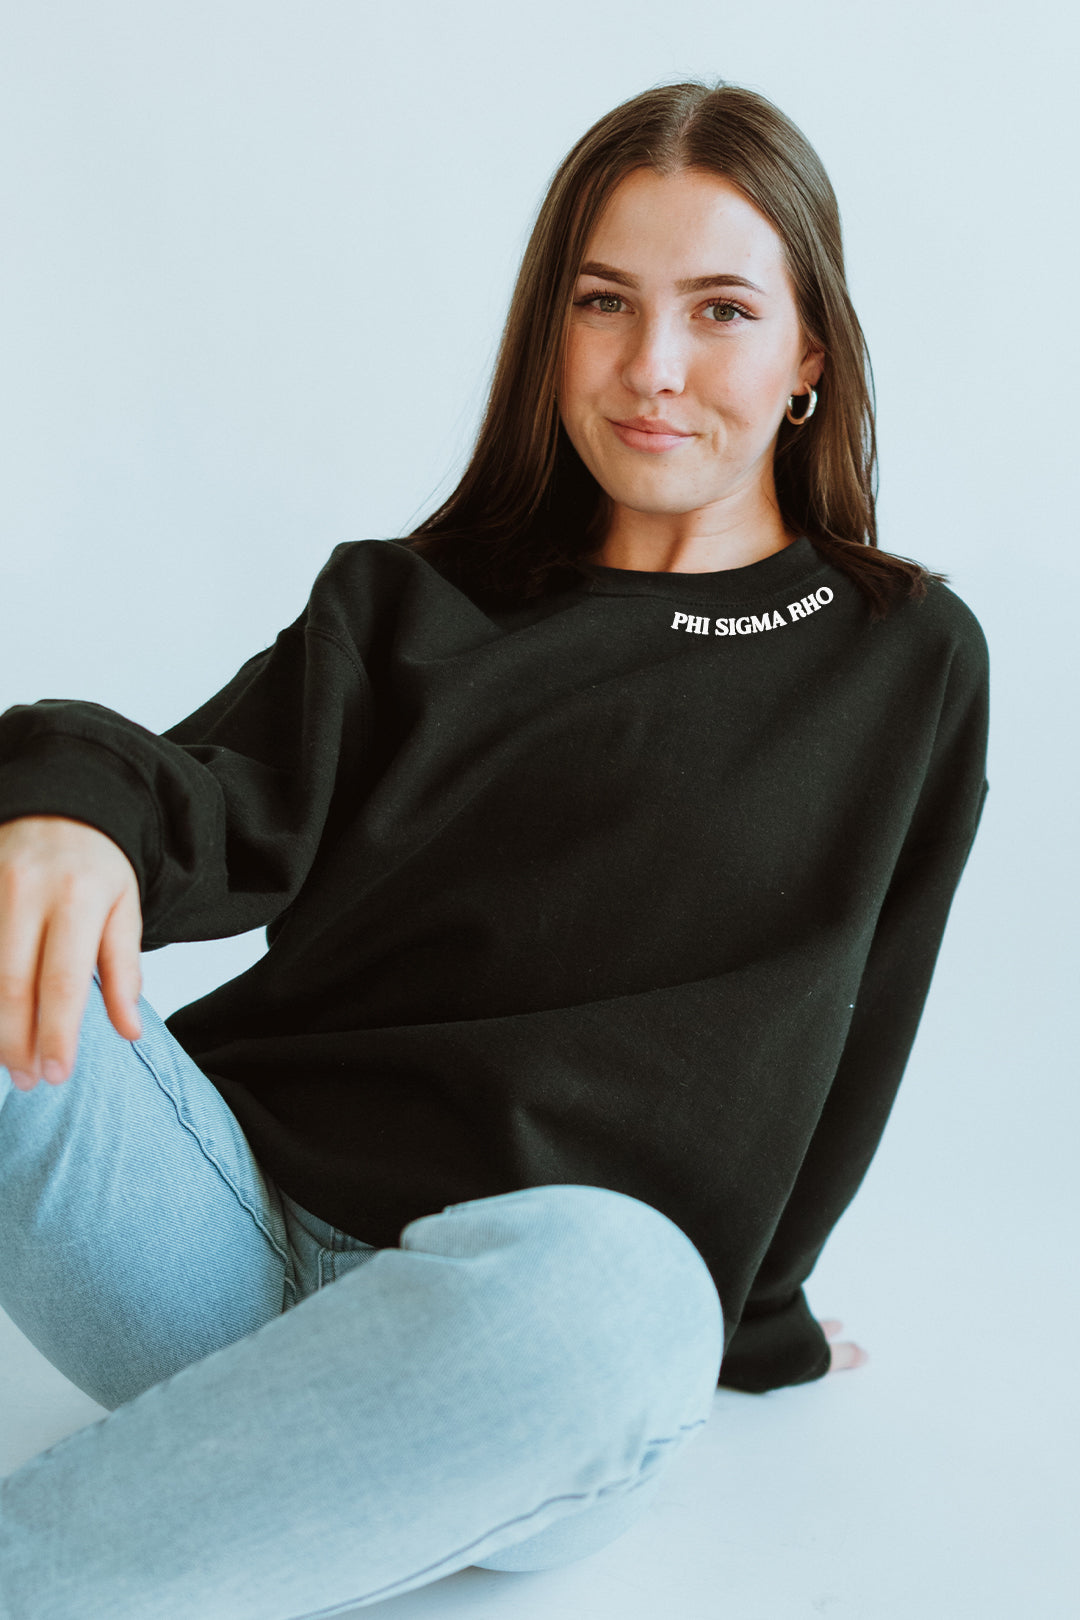 Black sweatshirt with White Collar text - Phi Sigma Rho